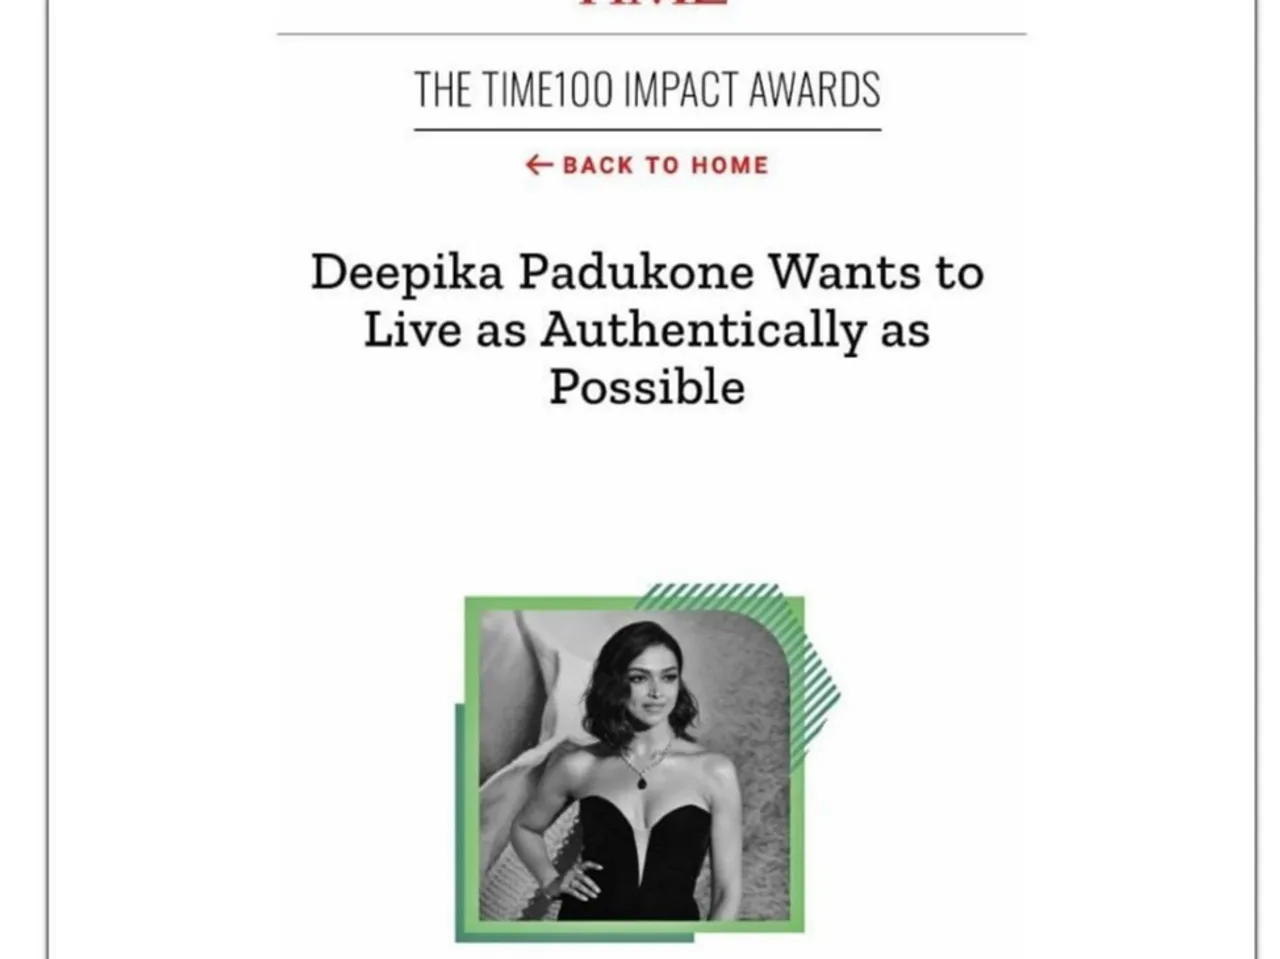 Deepika Padukone conferred with the TIME100 Impact Award!